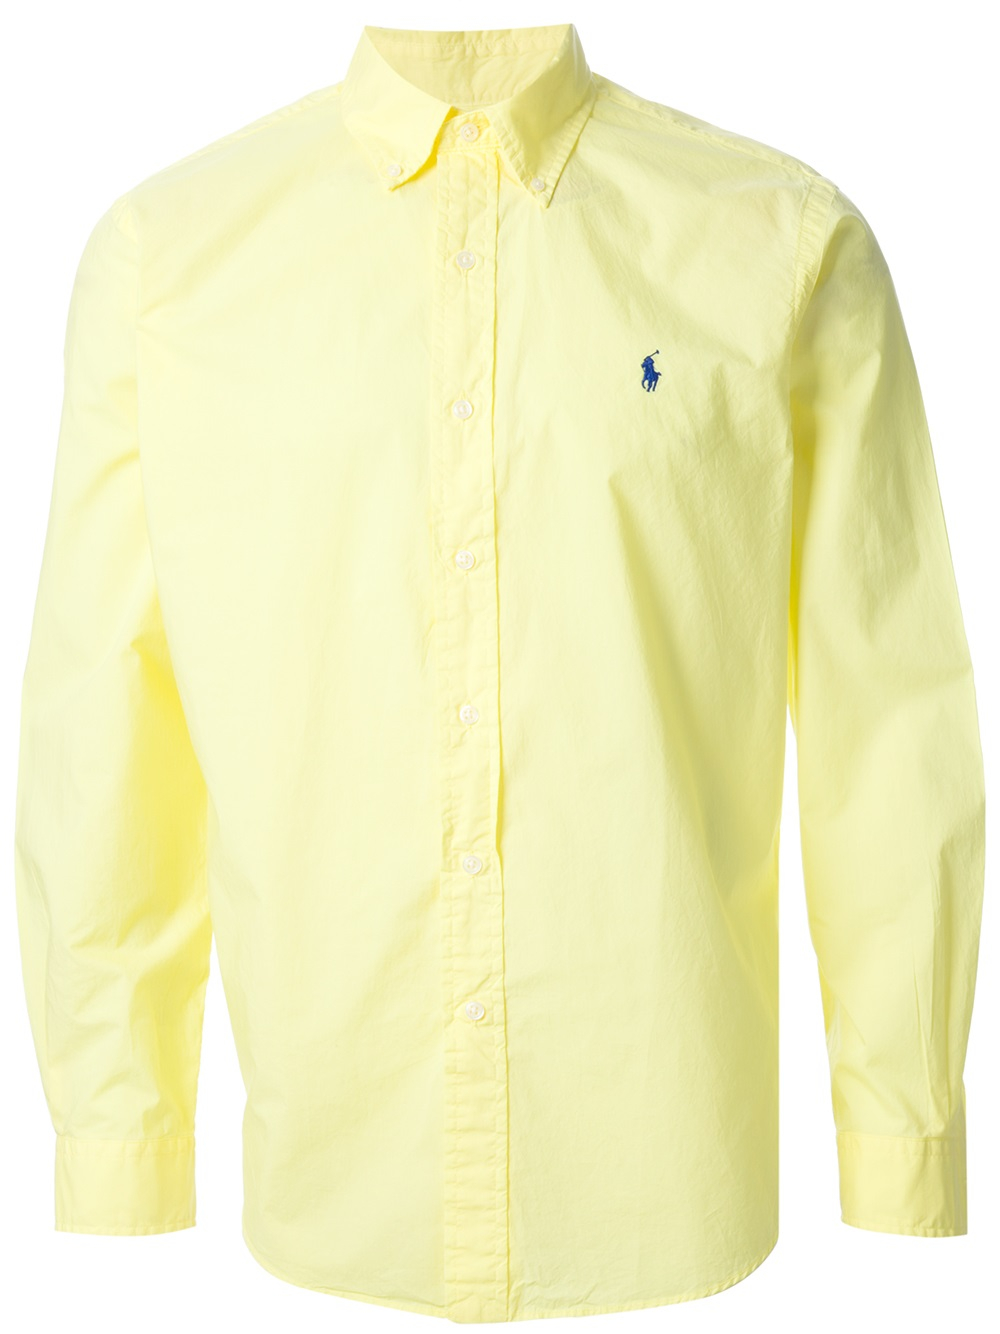 Lyst - Polo ralph lauren Classic Shirt in Yellow for Men